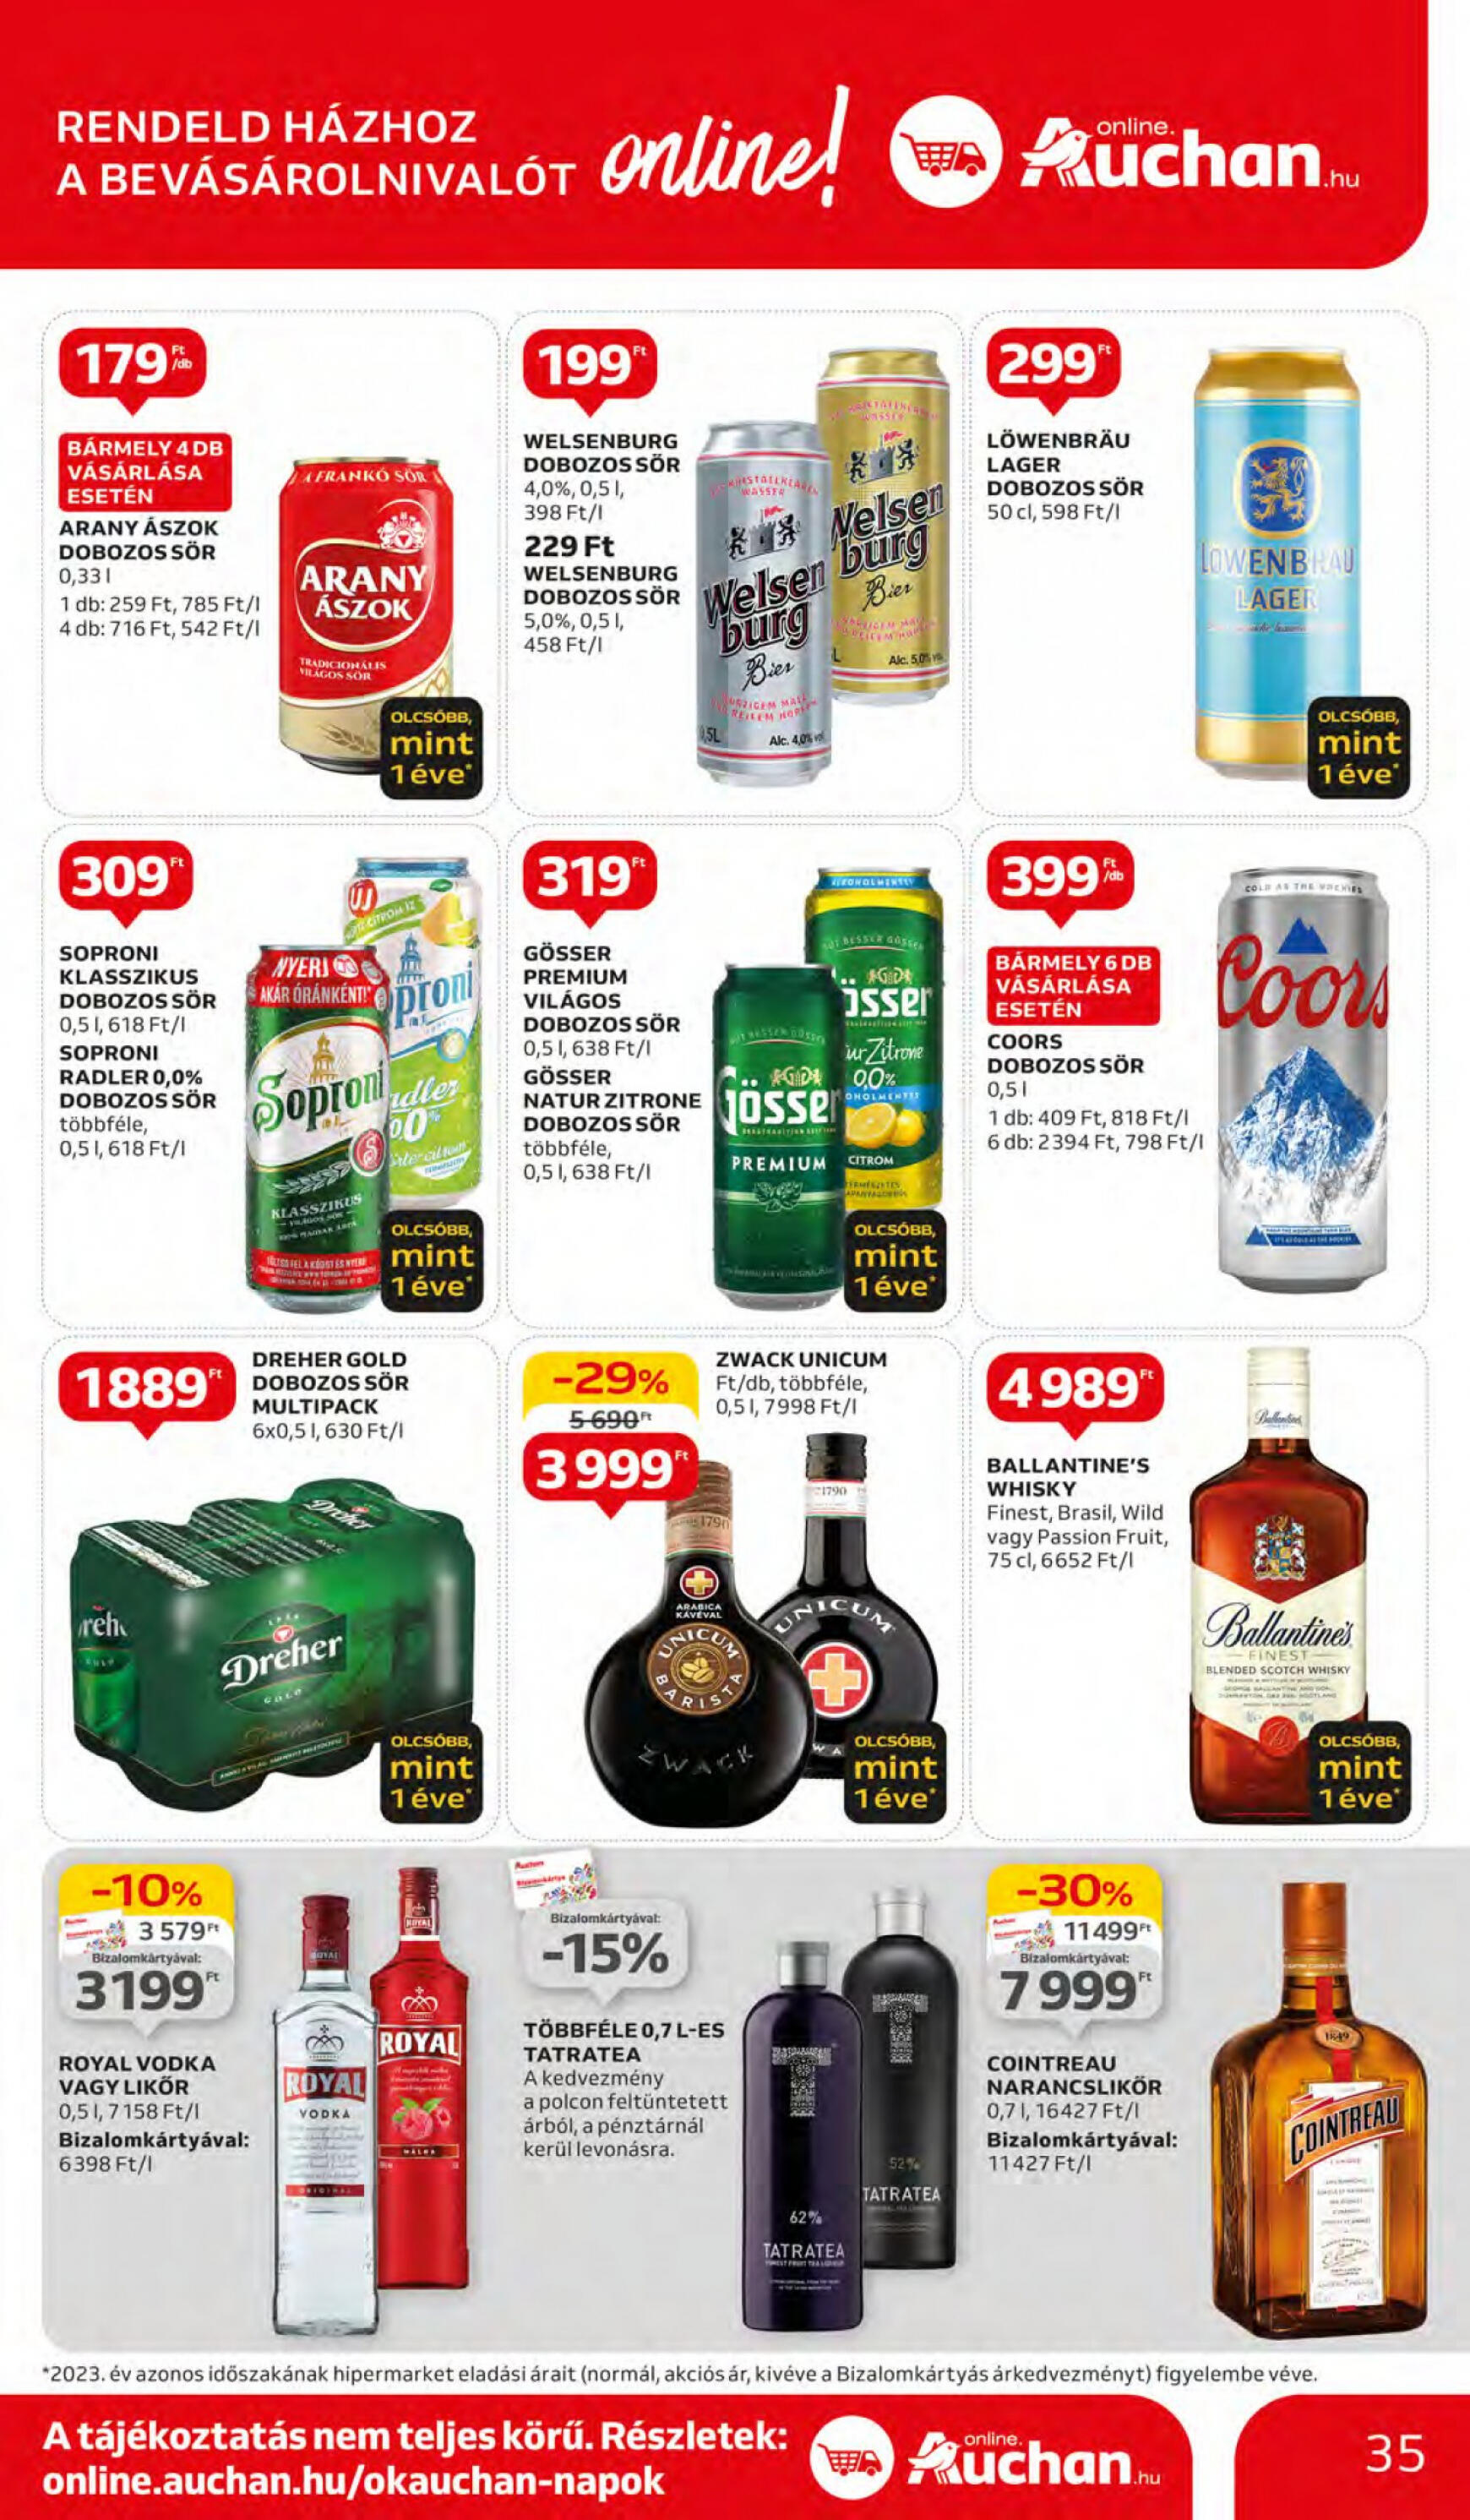 auchan - Aktuális újság Auchan 04.11. - 04.17. - page: 35